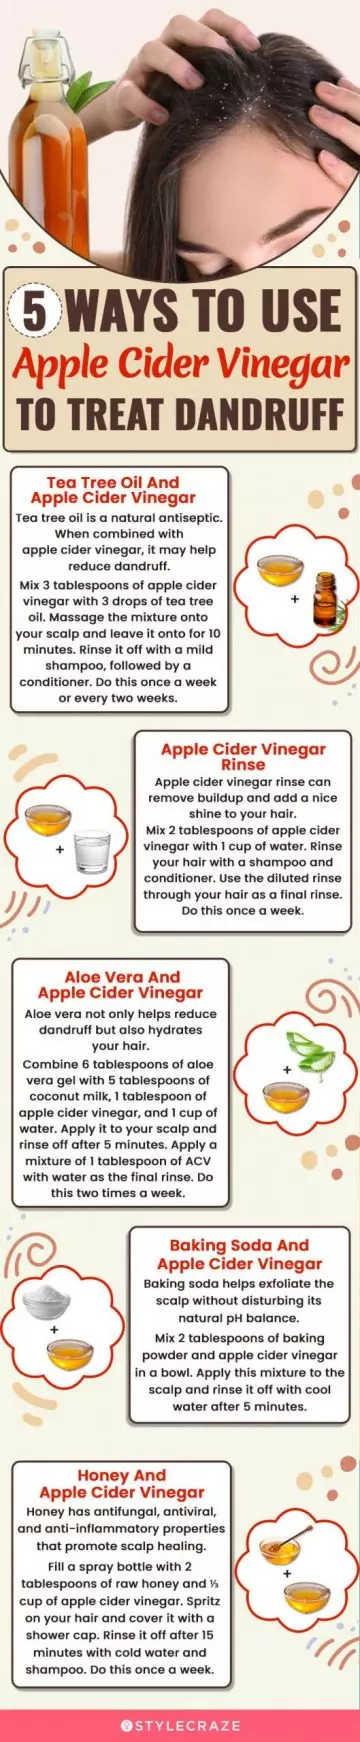 5 ways to use apple cider vinegar to treat dandruff (infographic)